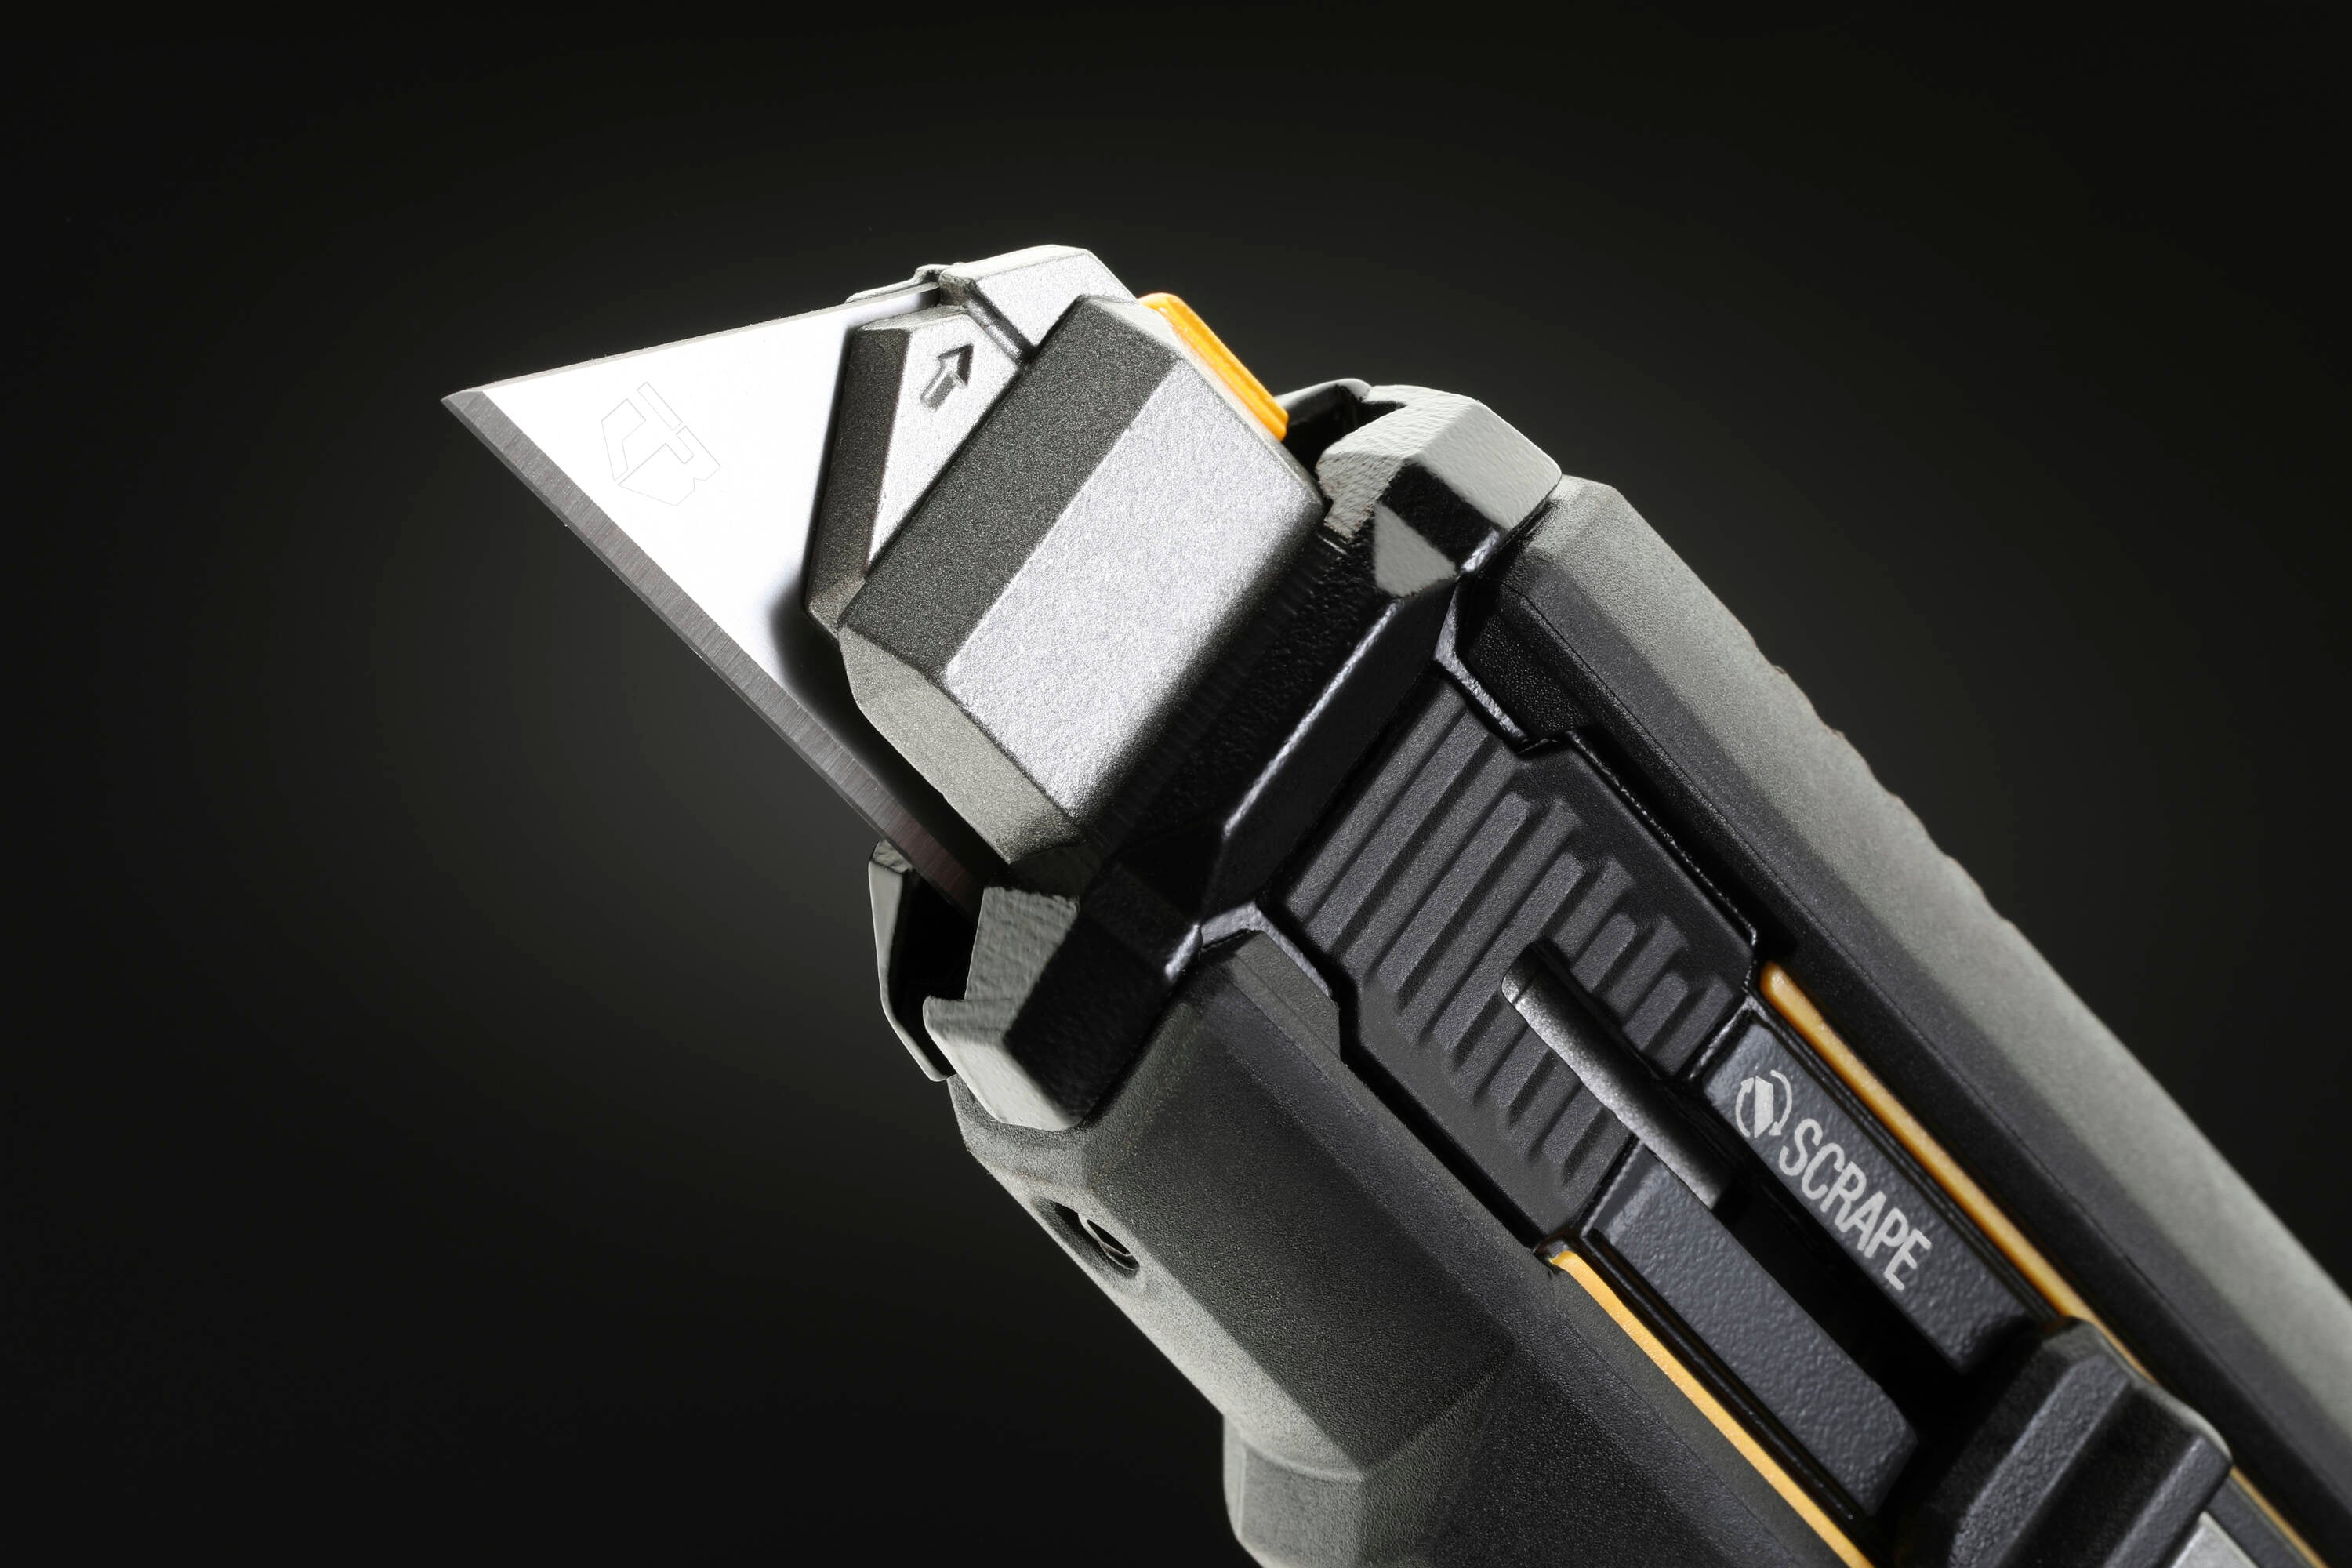 ToughBuilt - 🏆🤩 AWARD ALERT 🤩🏆⁠⁠ ⁠⁠ Our Scraper Utility Knife